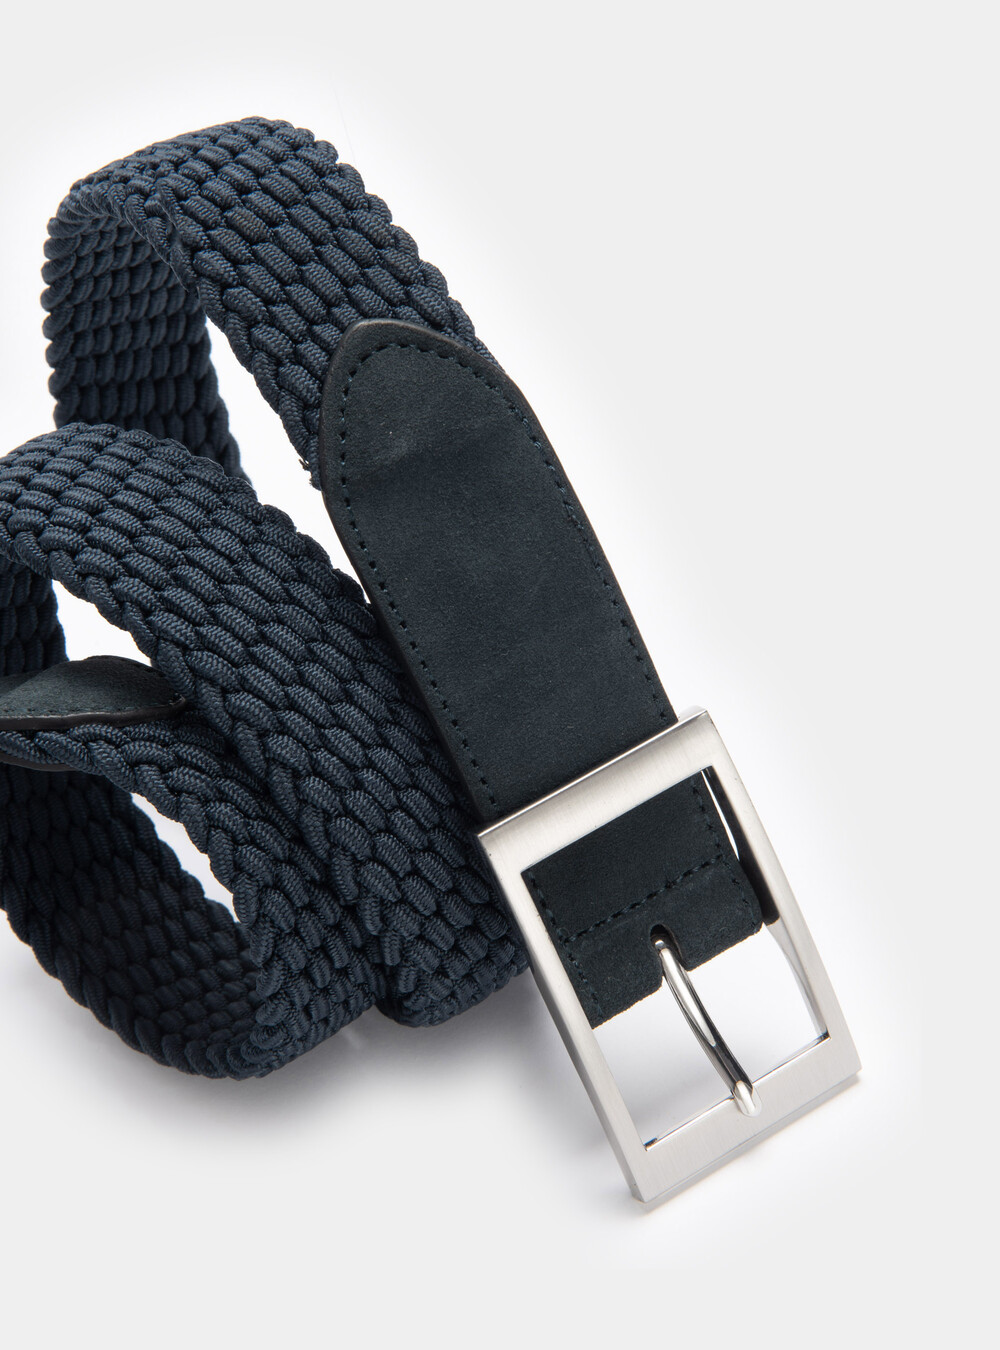 Cintura intrecciata elastica con finiture in suede | GutteridgeEU |  Accessori Uomo